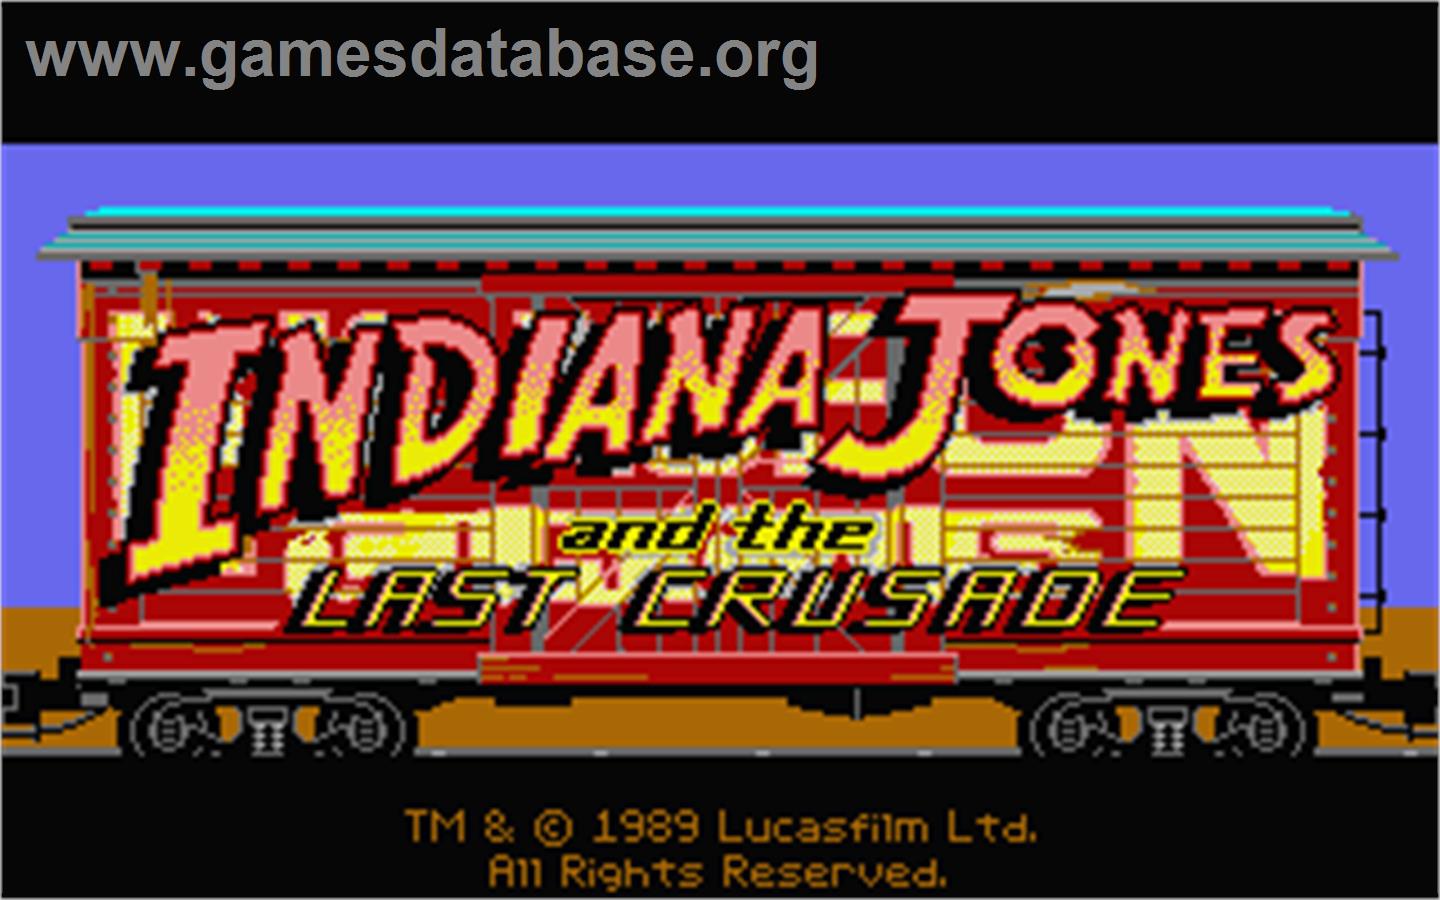 Indiana Jones and the Last Crusade: The Action Game - Atari ST - Artwork - Title Screen